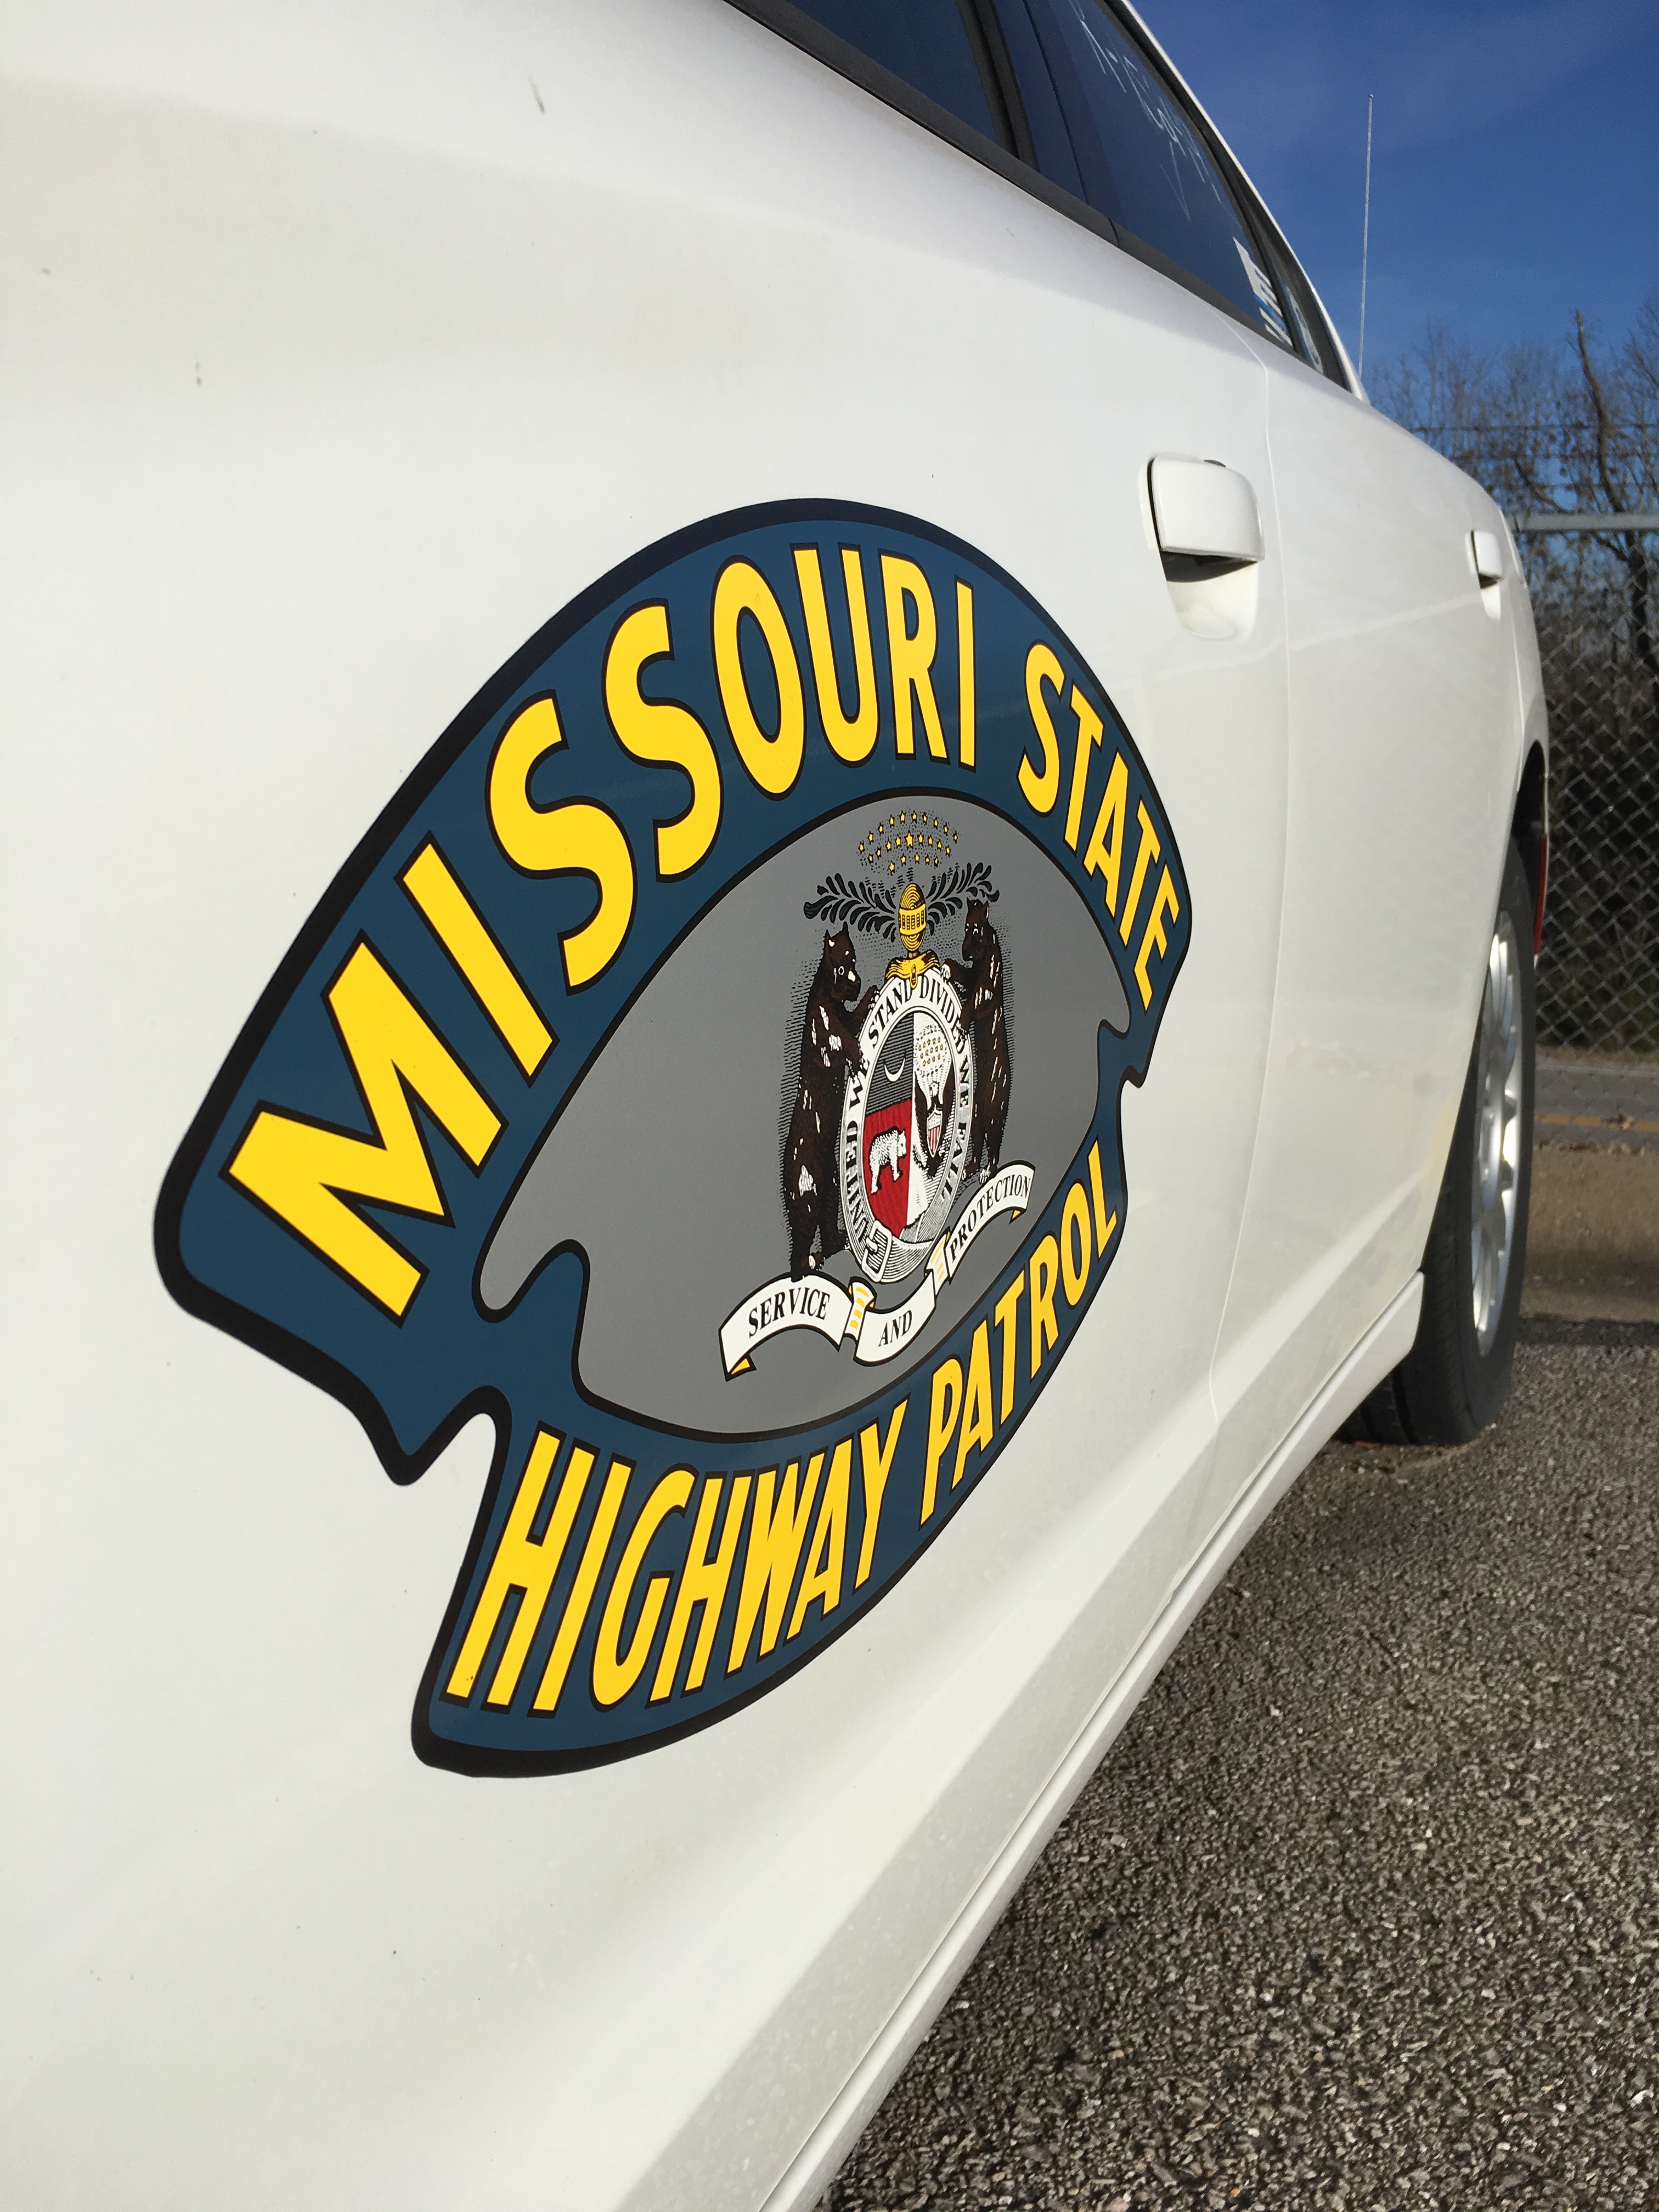 MSHP Reports Pursuit Preceded Deadly Car Crash